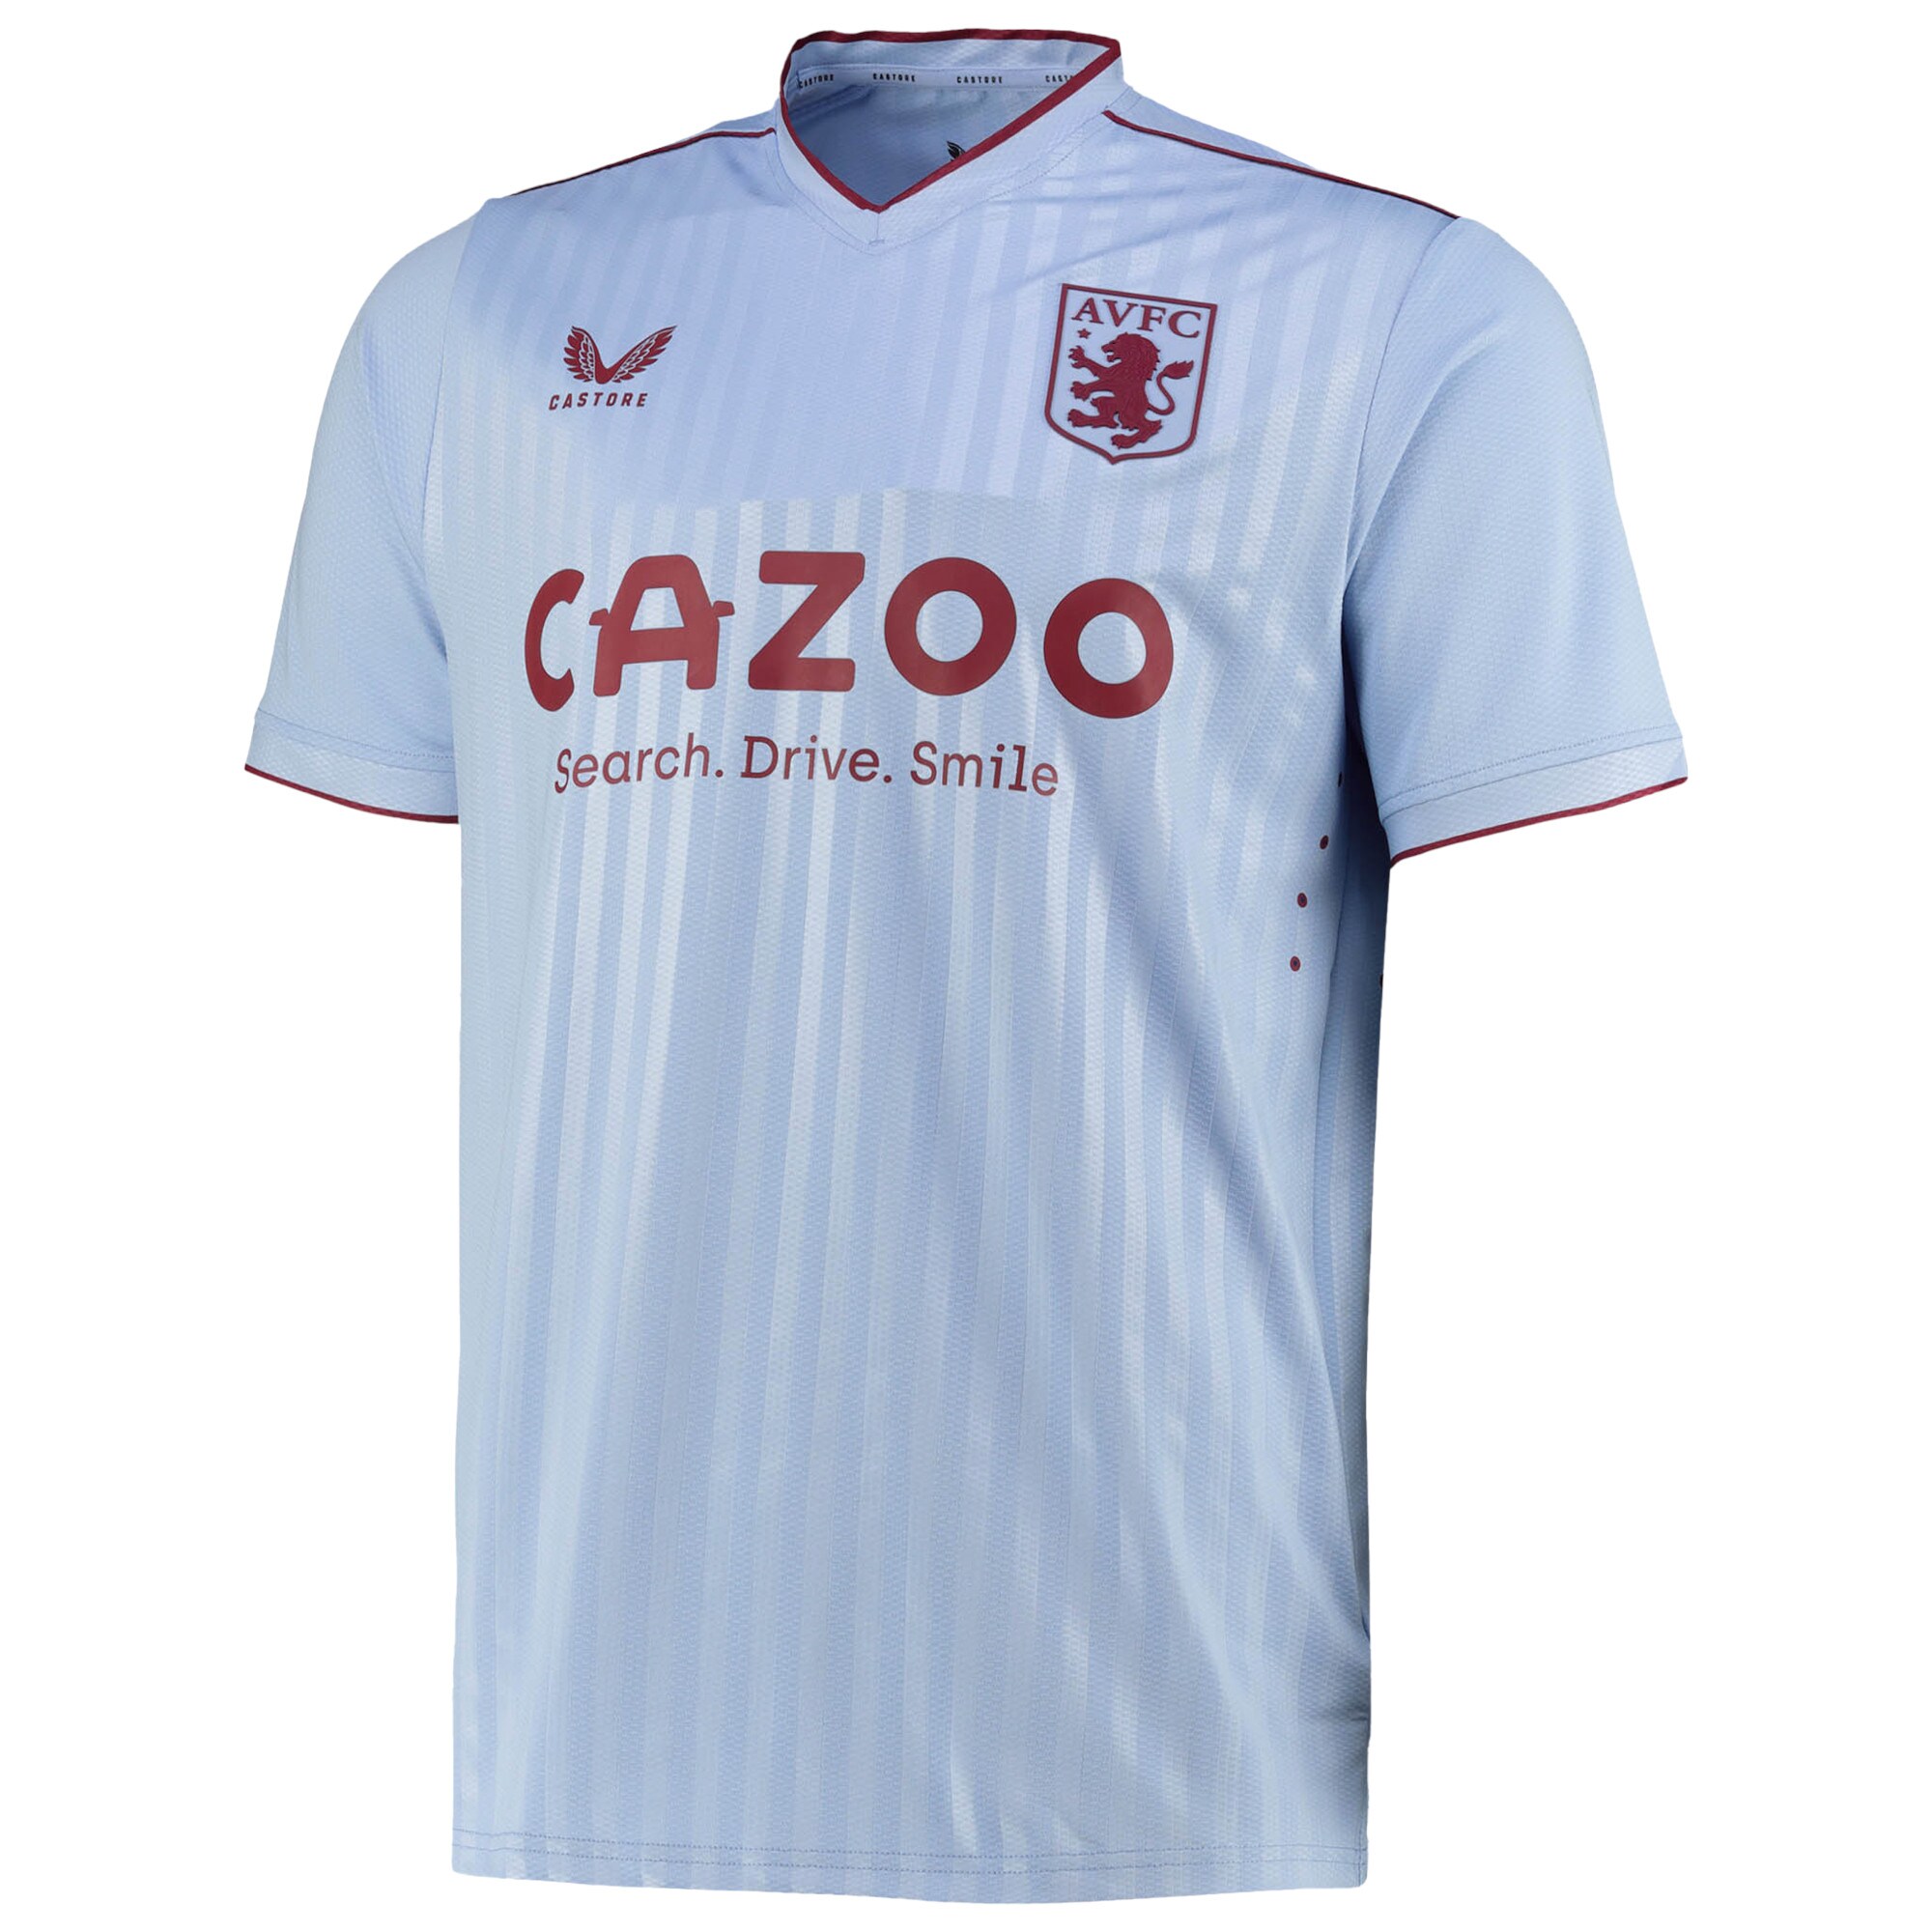 Aston Villa Away Pro Shirt 2022-23 with Young 18 printing